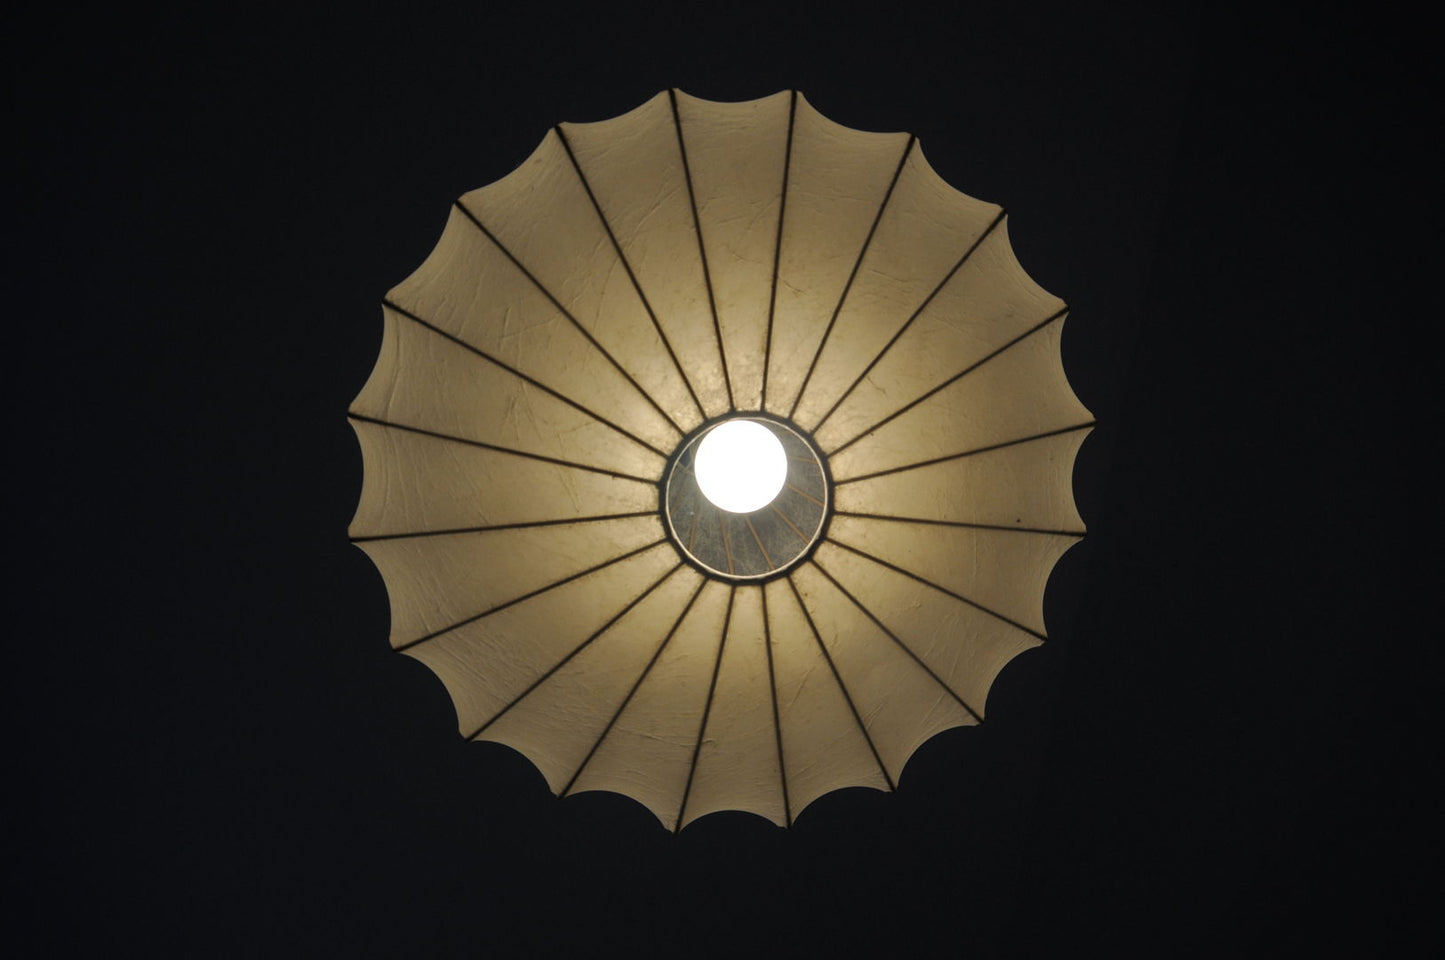 Cocoon Hanging Lamp by Goldkant Leuchten, 1960s